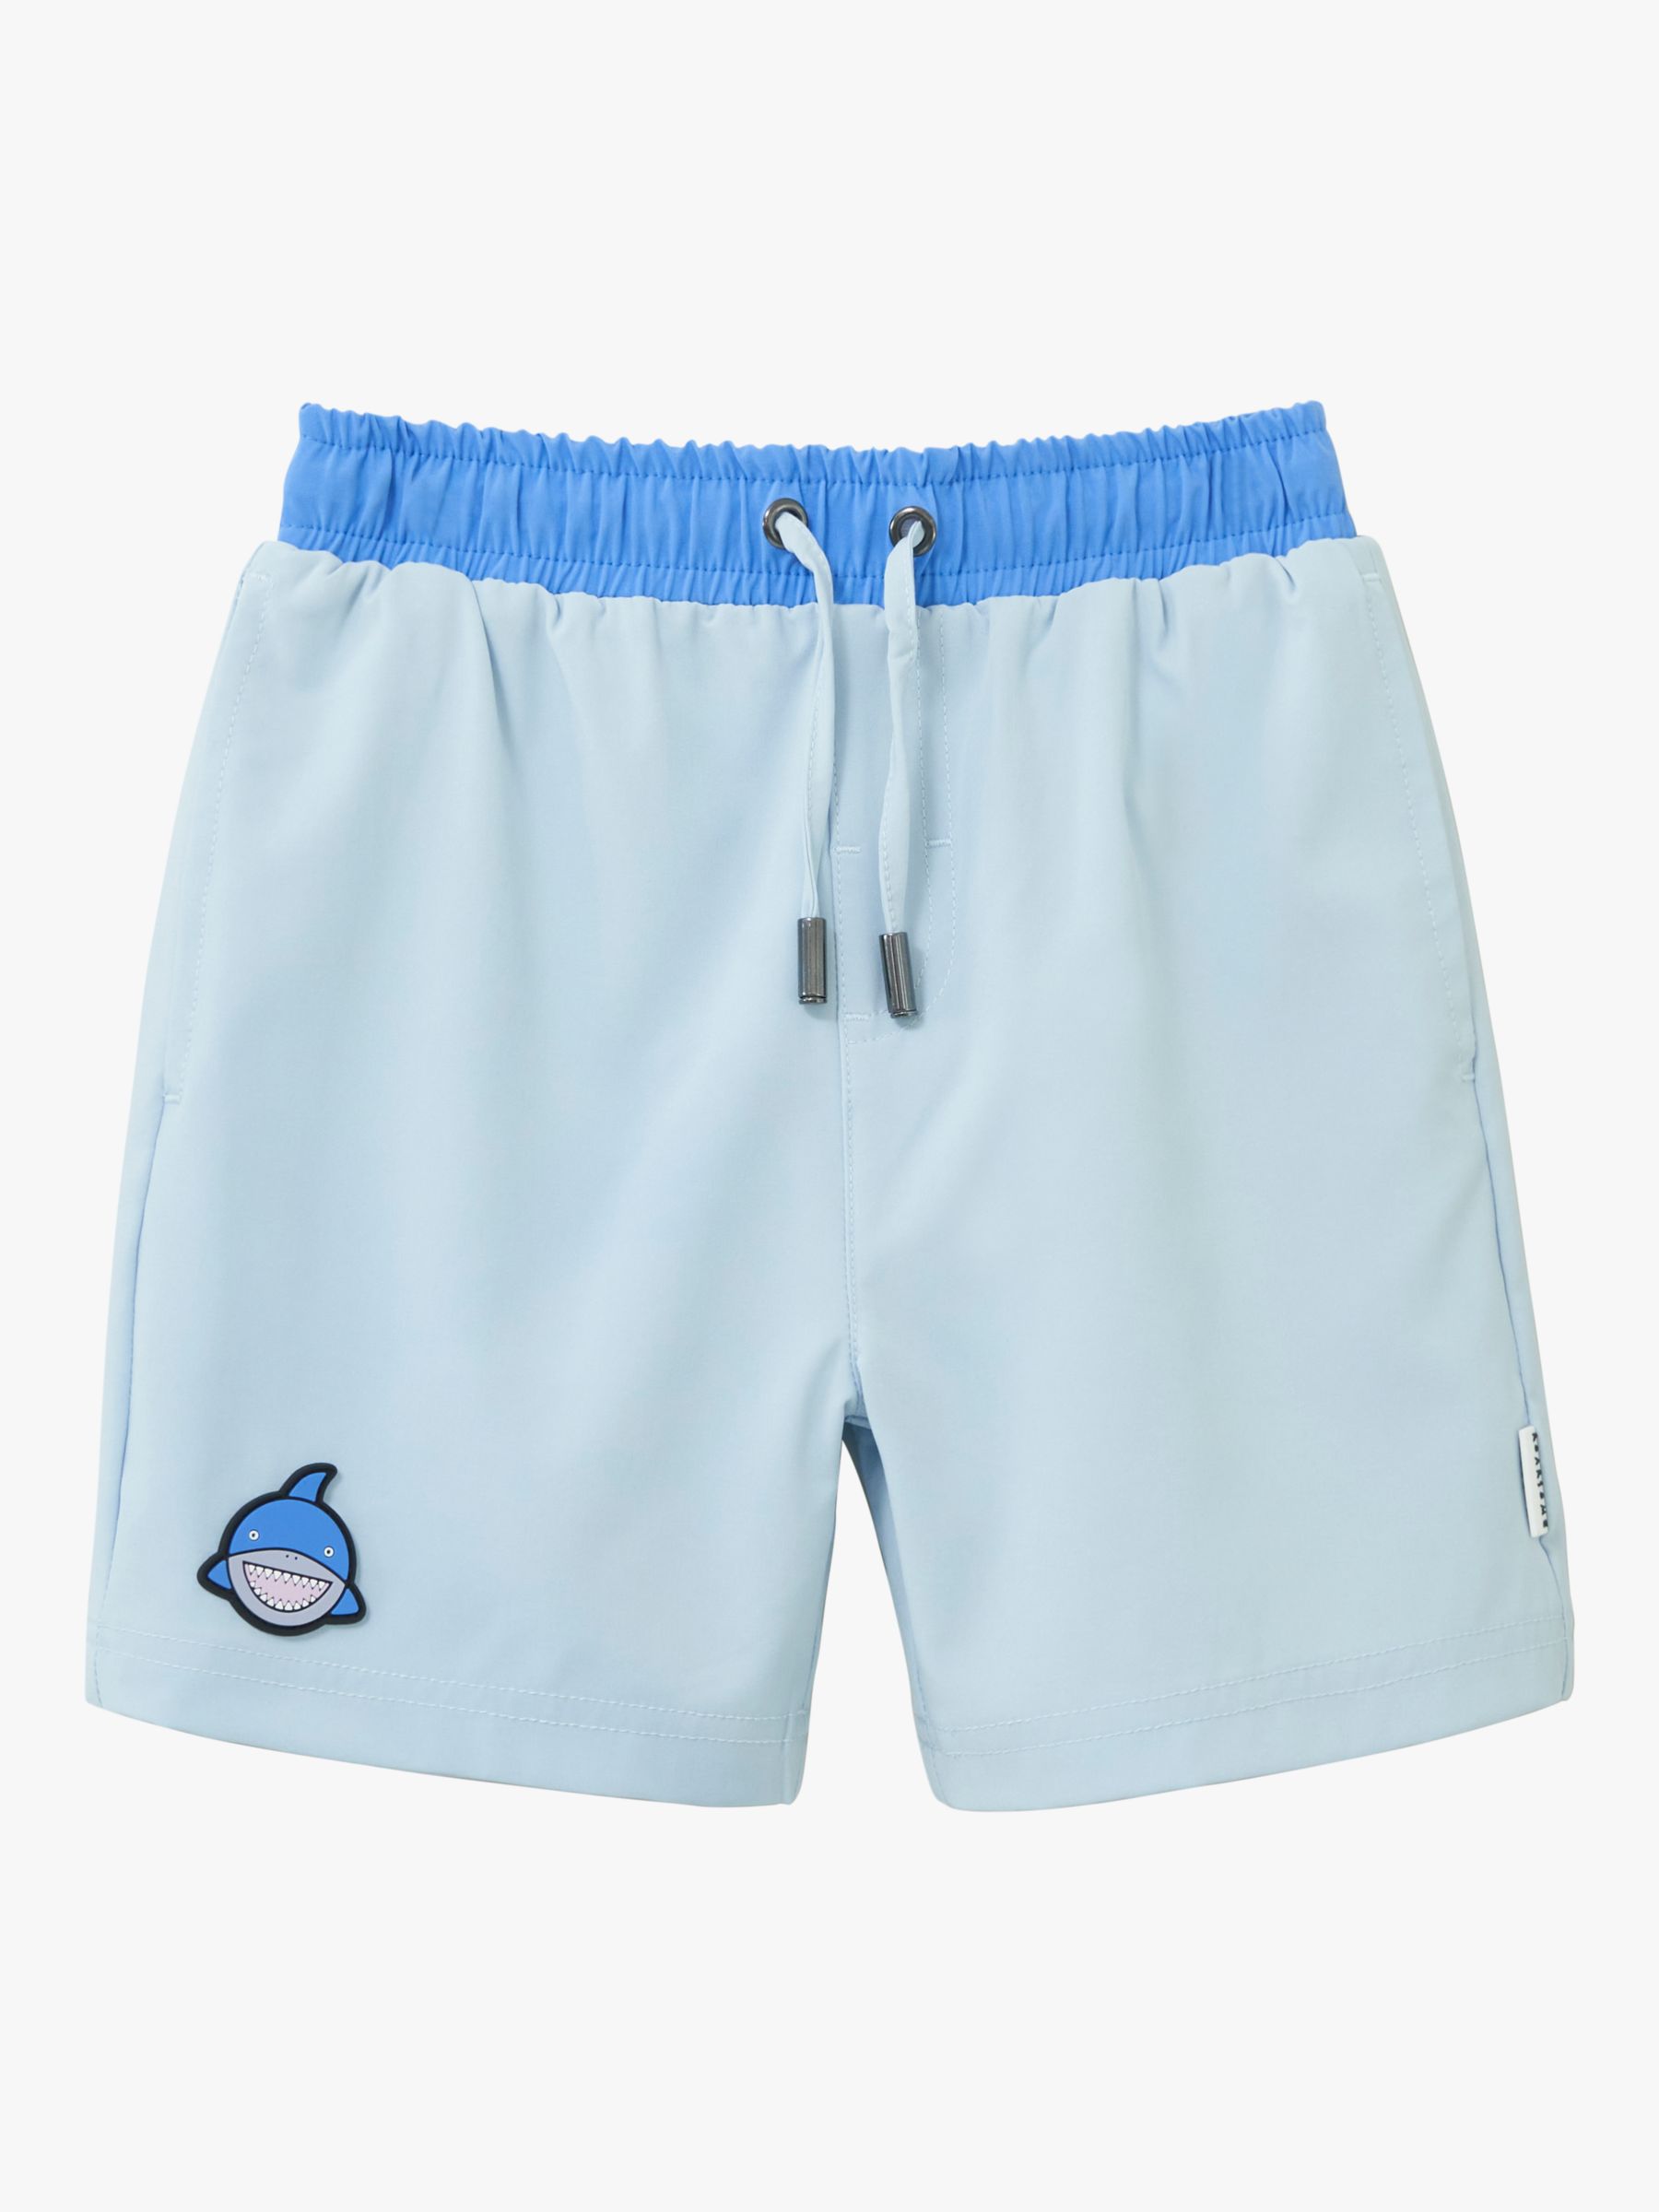 Roarsome Kids' Reef Swim Shorts, Light Blue, 2-3 years